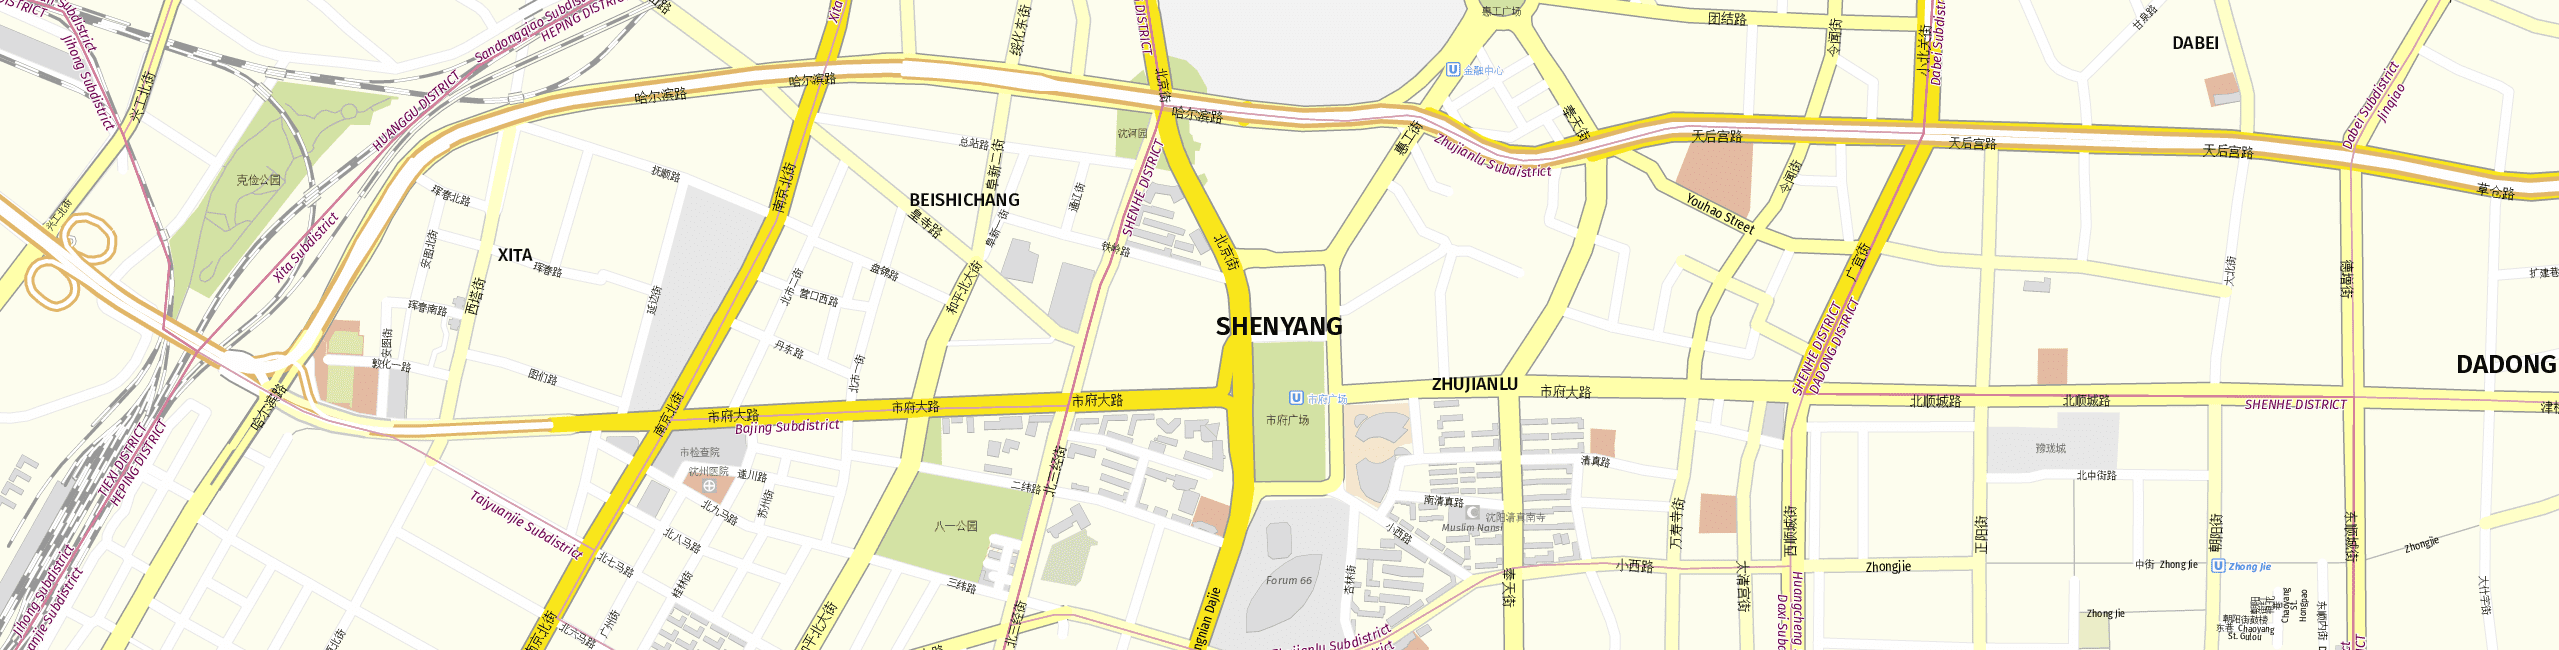 Stadtplan Shenyang zum Downloaden.